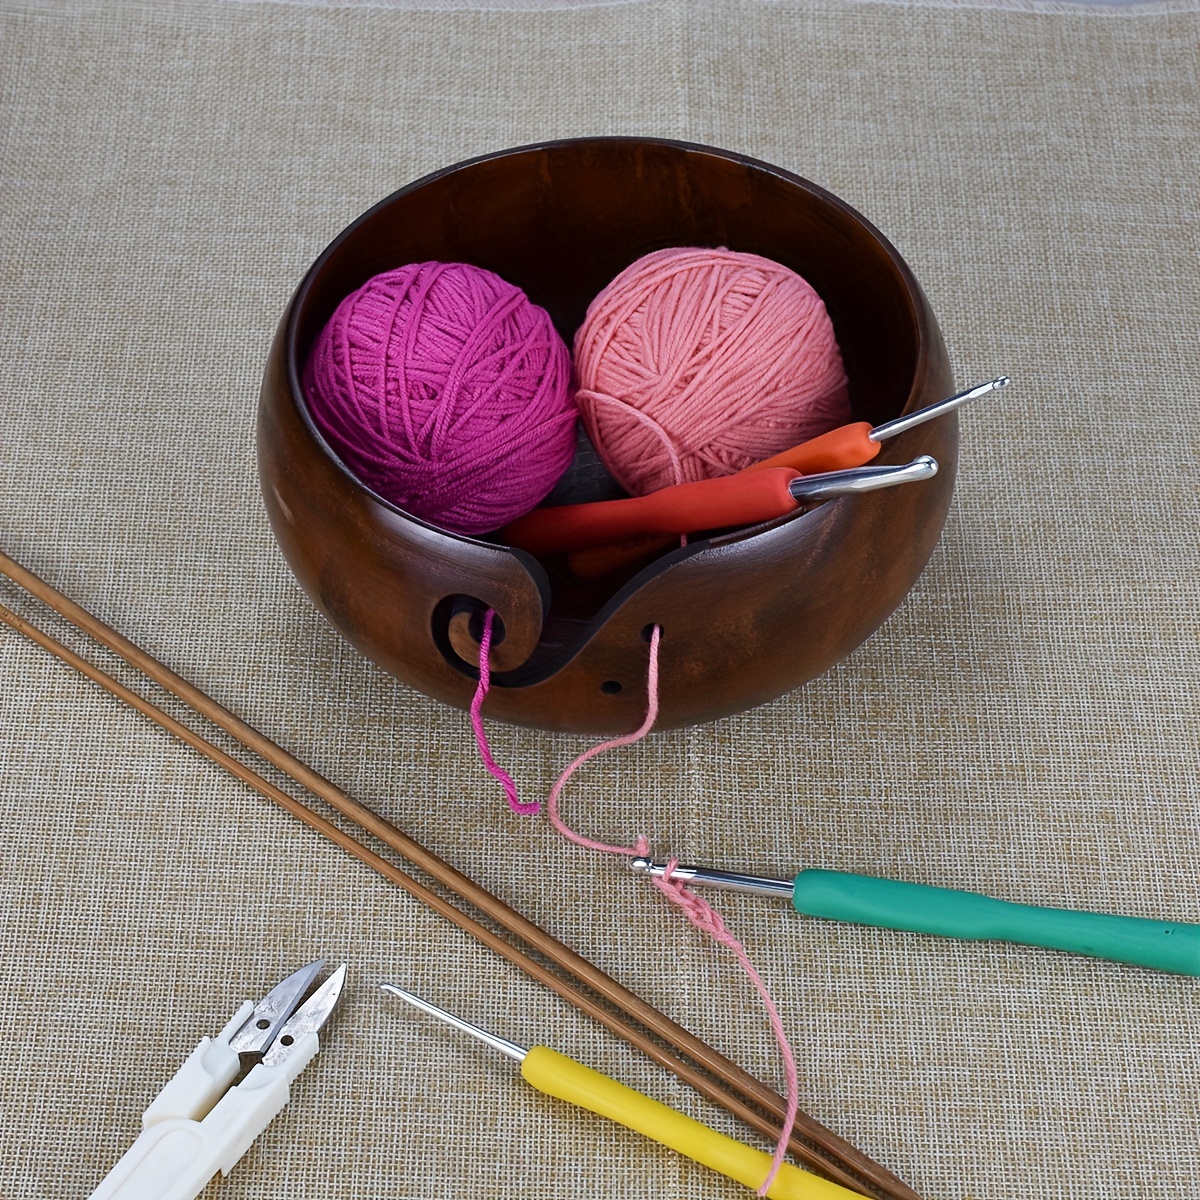 WILLBOND Wooden Yarn Bowl, 6 x 3 Inches Knitting Yarn Bowls with Holes Crochet Bowl Holder Handmade Yarn Storage Bowl for DIY Knitting Crocheting